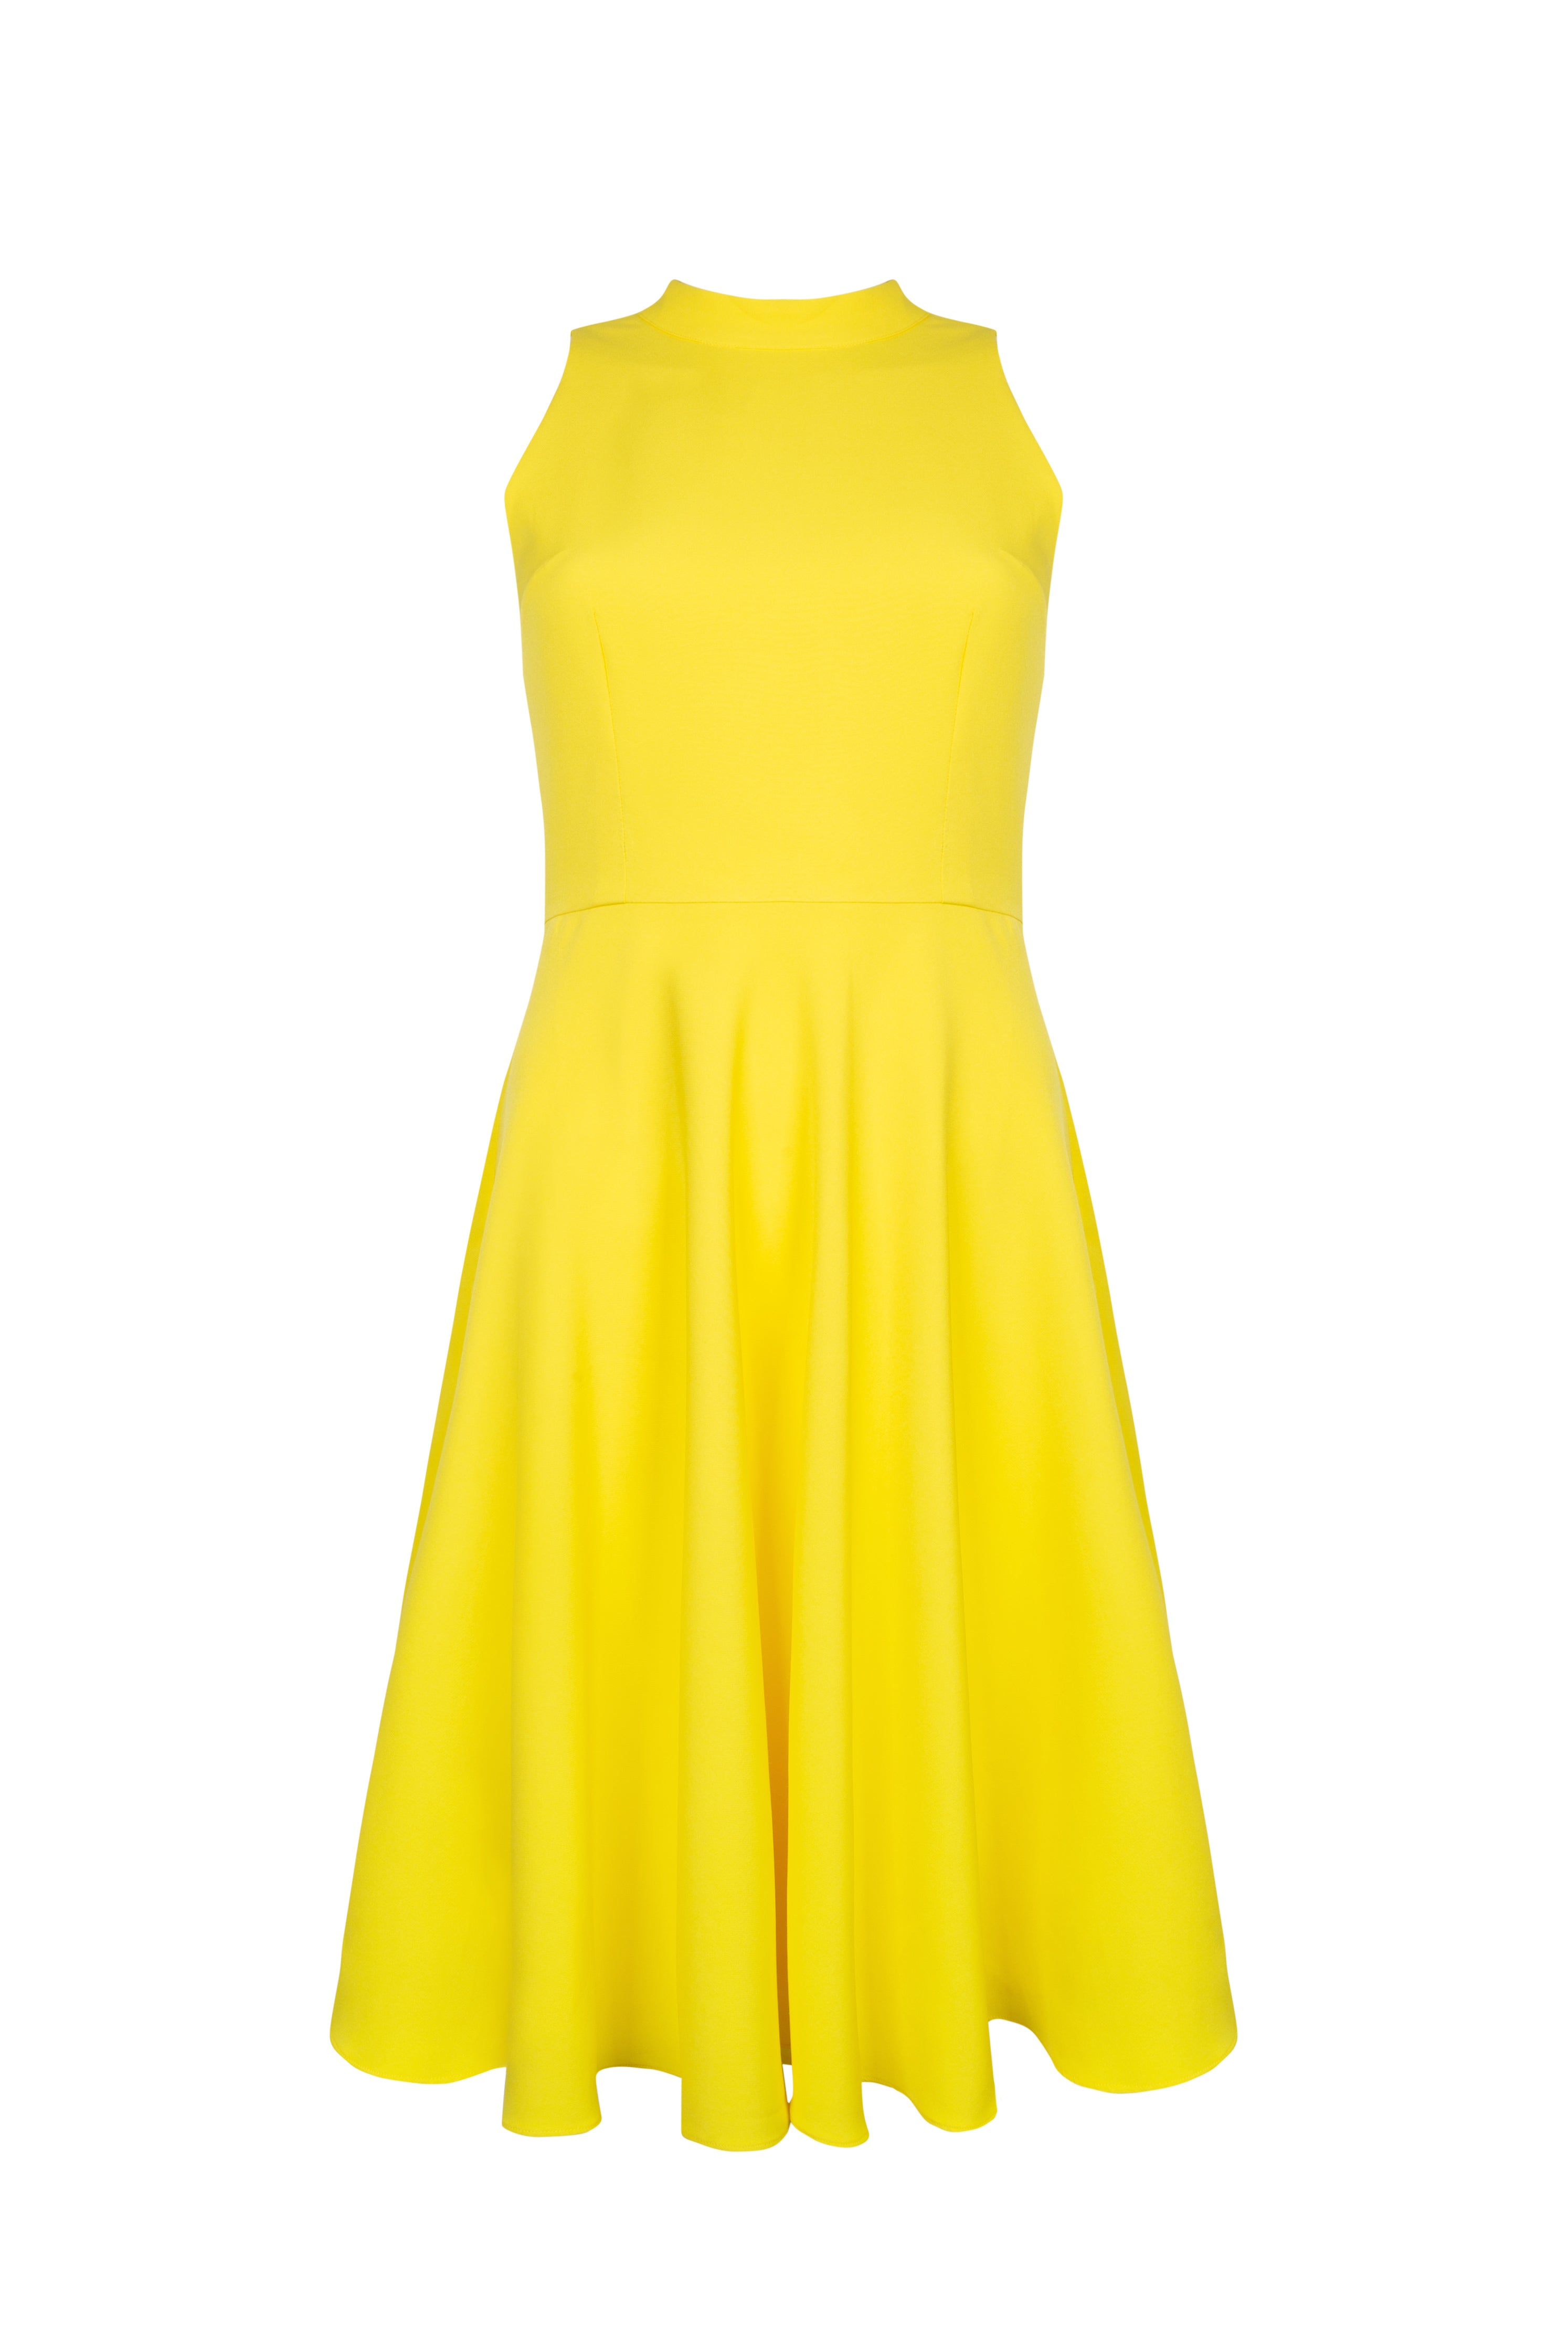 Bright yellow summer dress